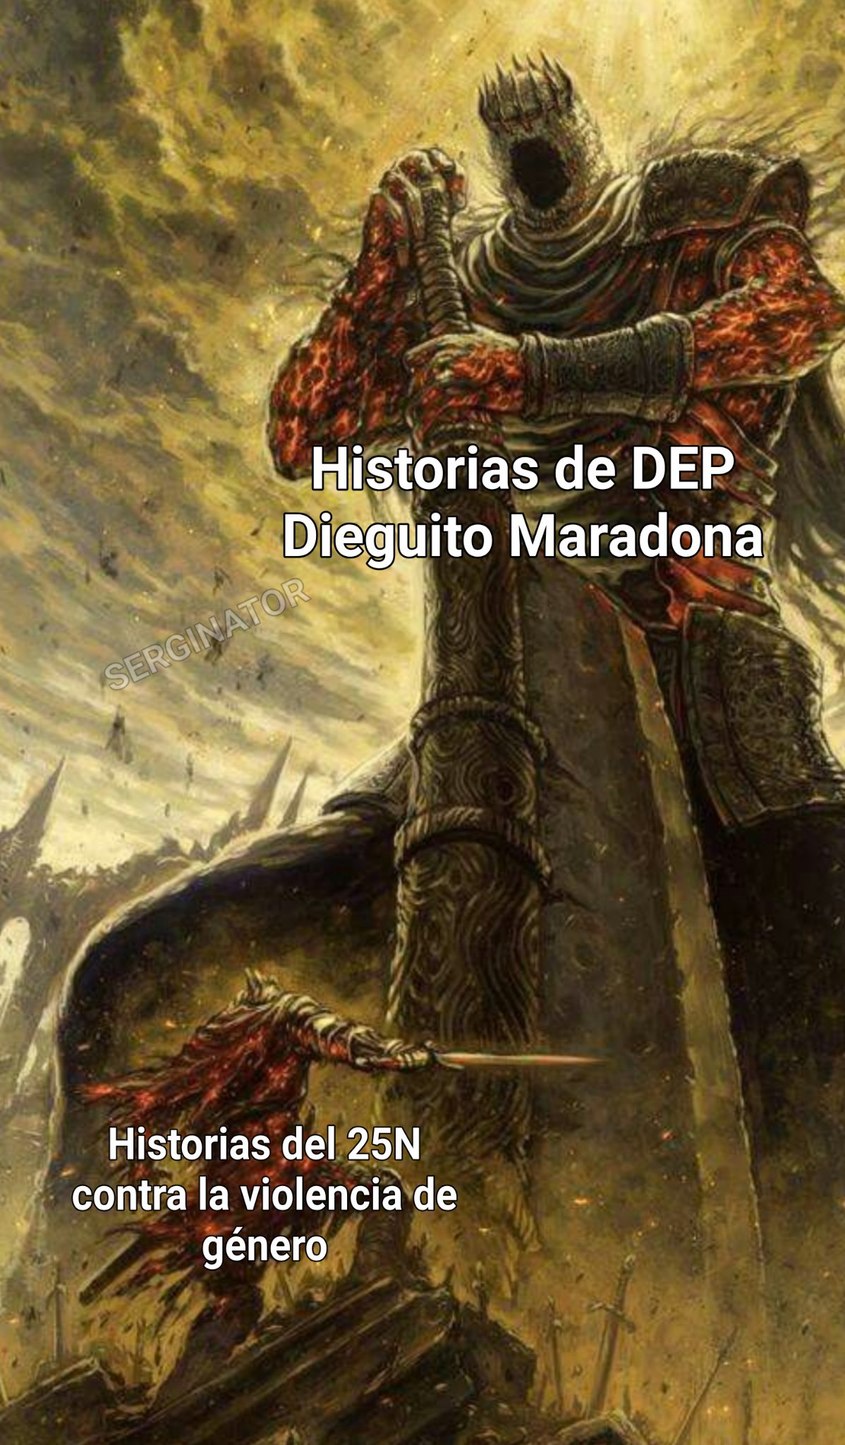 DEP Diego :( - meme